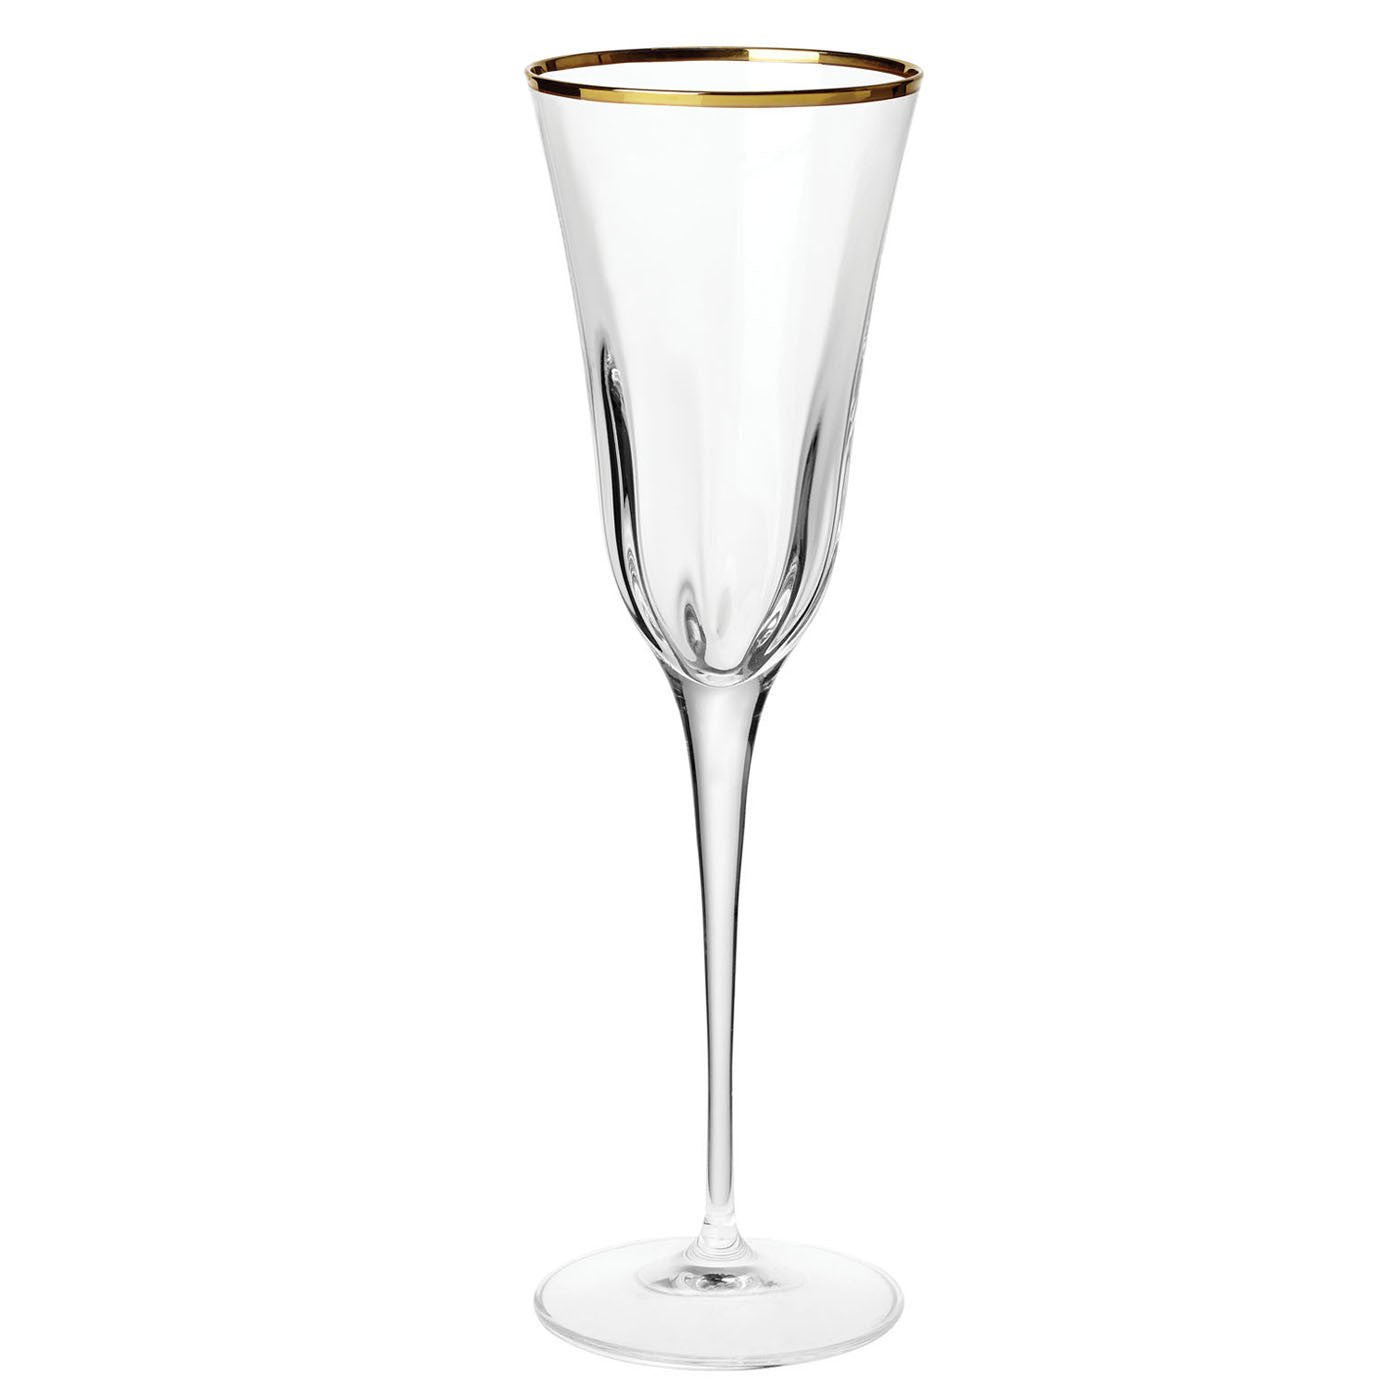 VIETRI: Optical Gold Champagne - Artistica.com